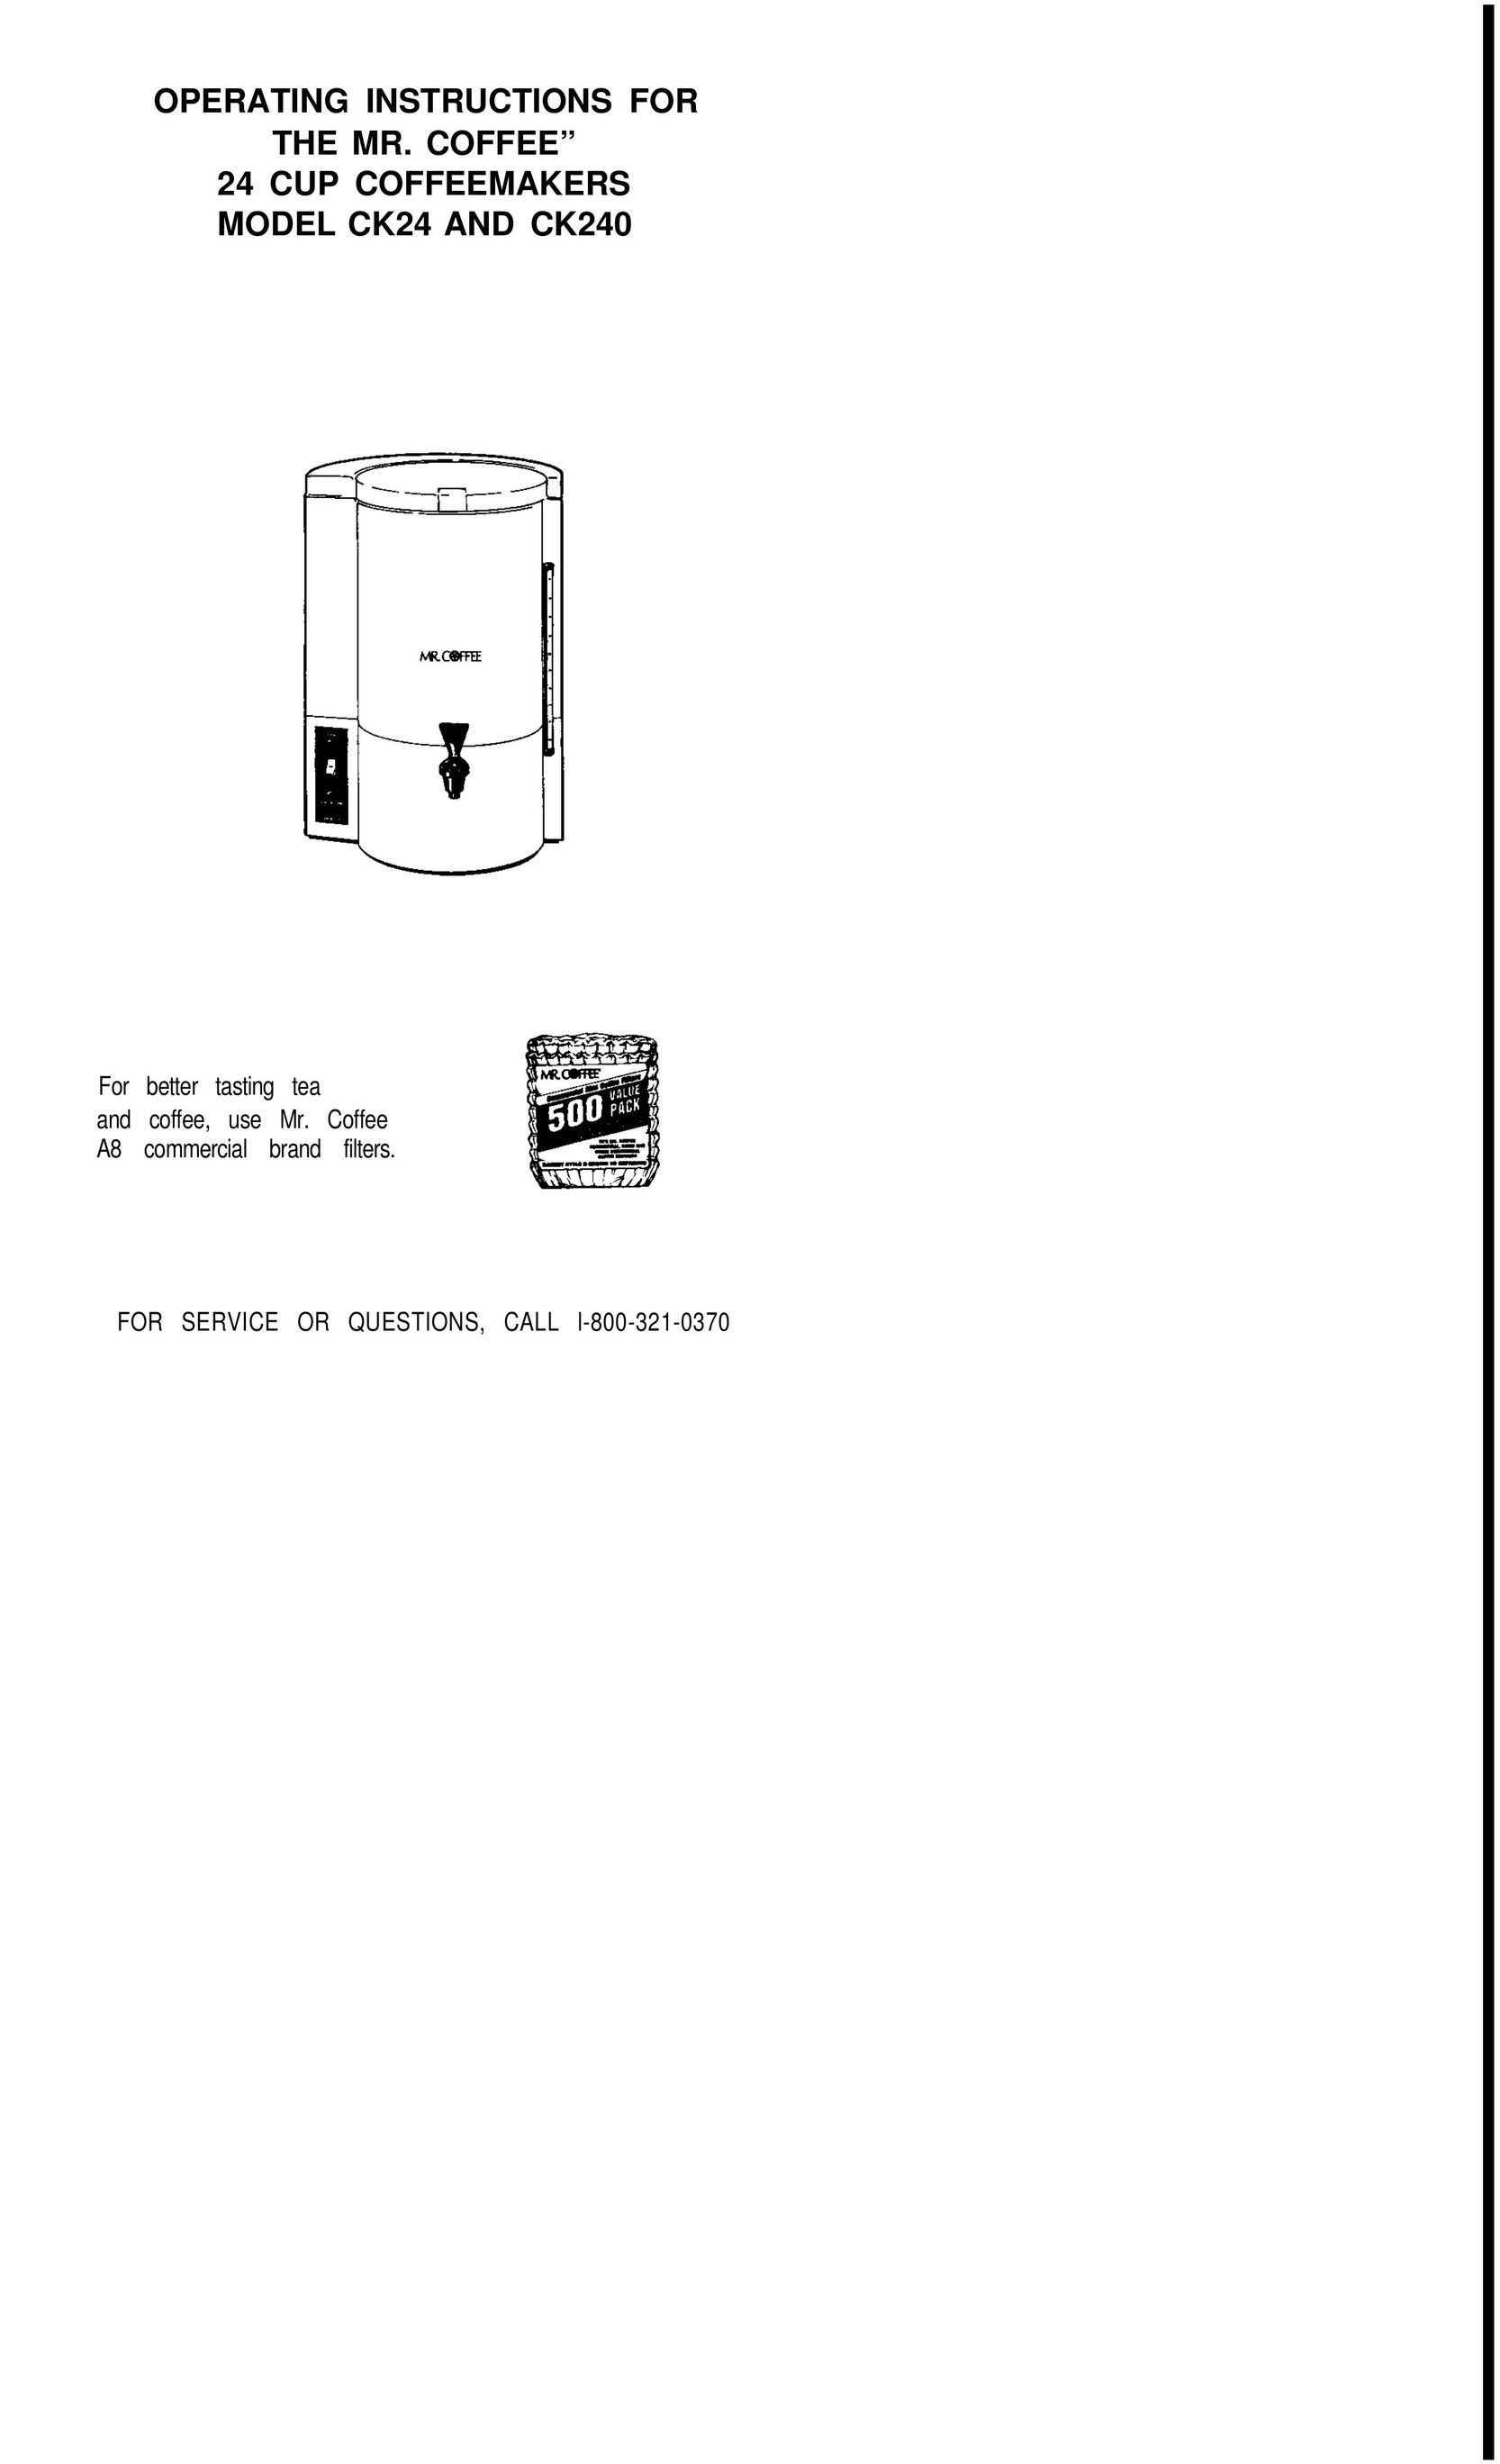 Mr. Coffee CK24 Coffeemaker User Manual